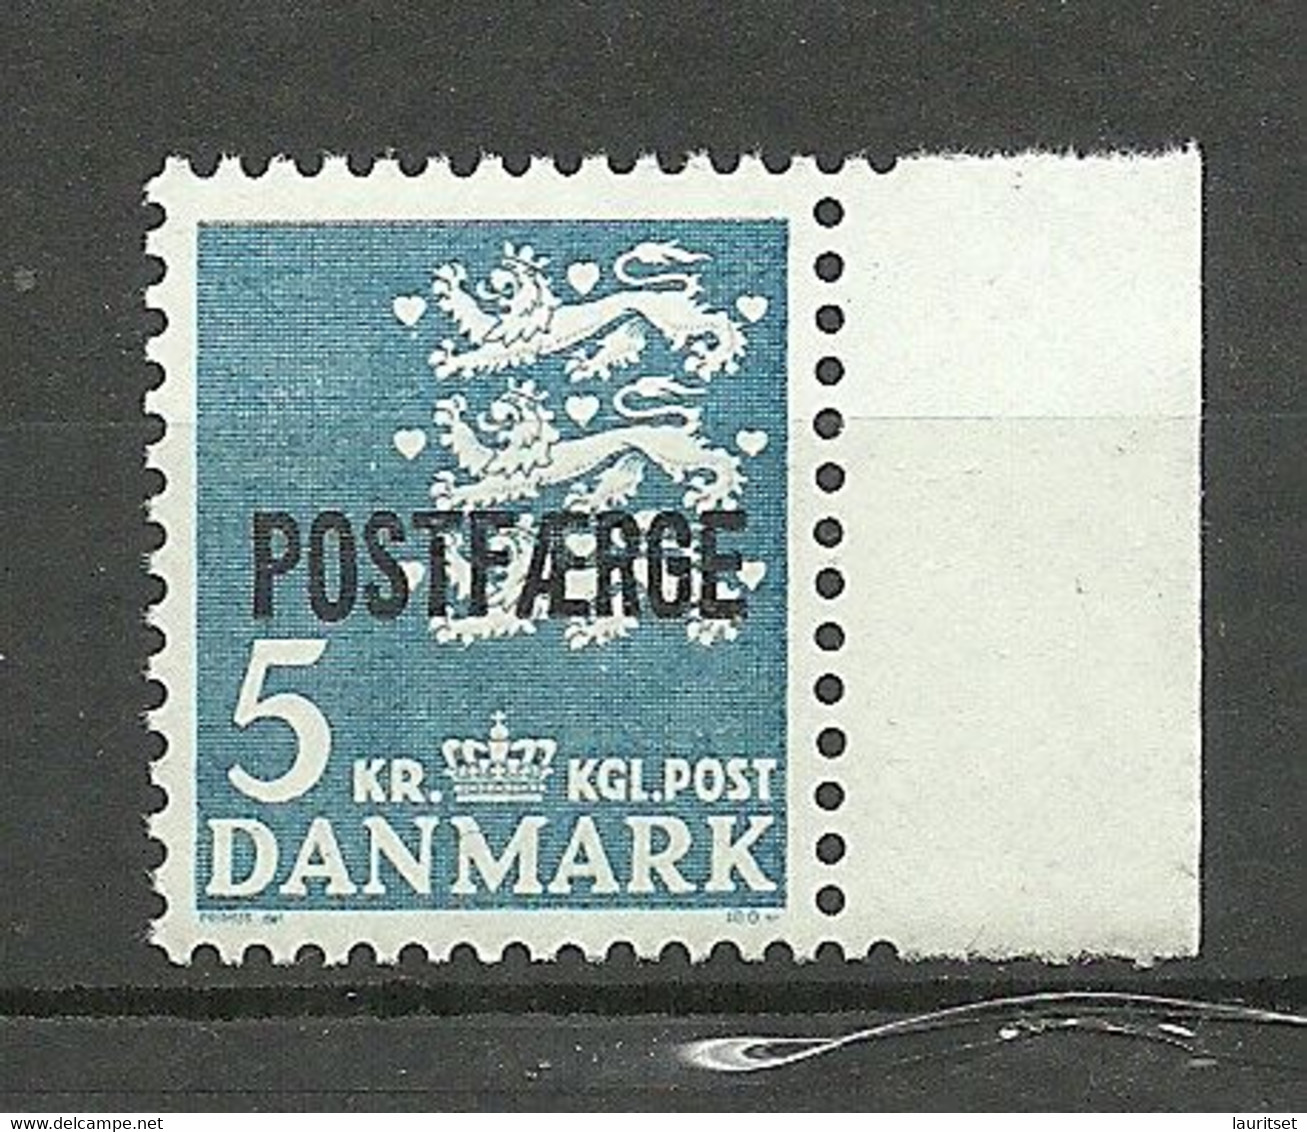 DENMARK Dänemark 1972 Michel 44 MNH Postfähre Paketmarke - Colis Postaux